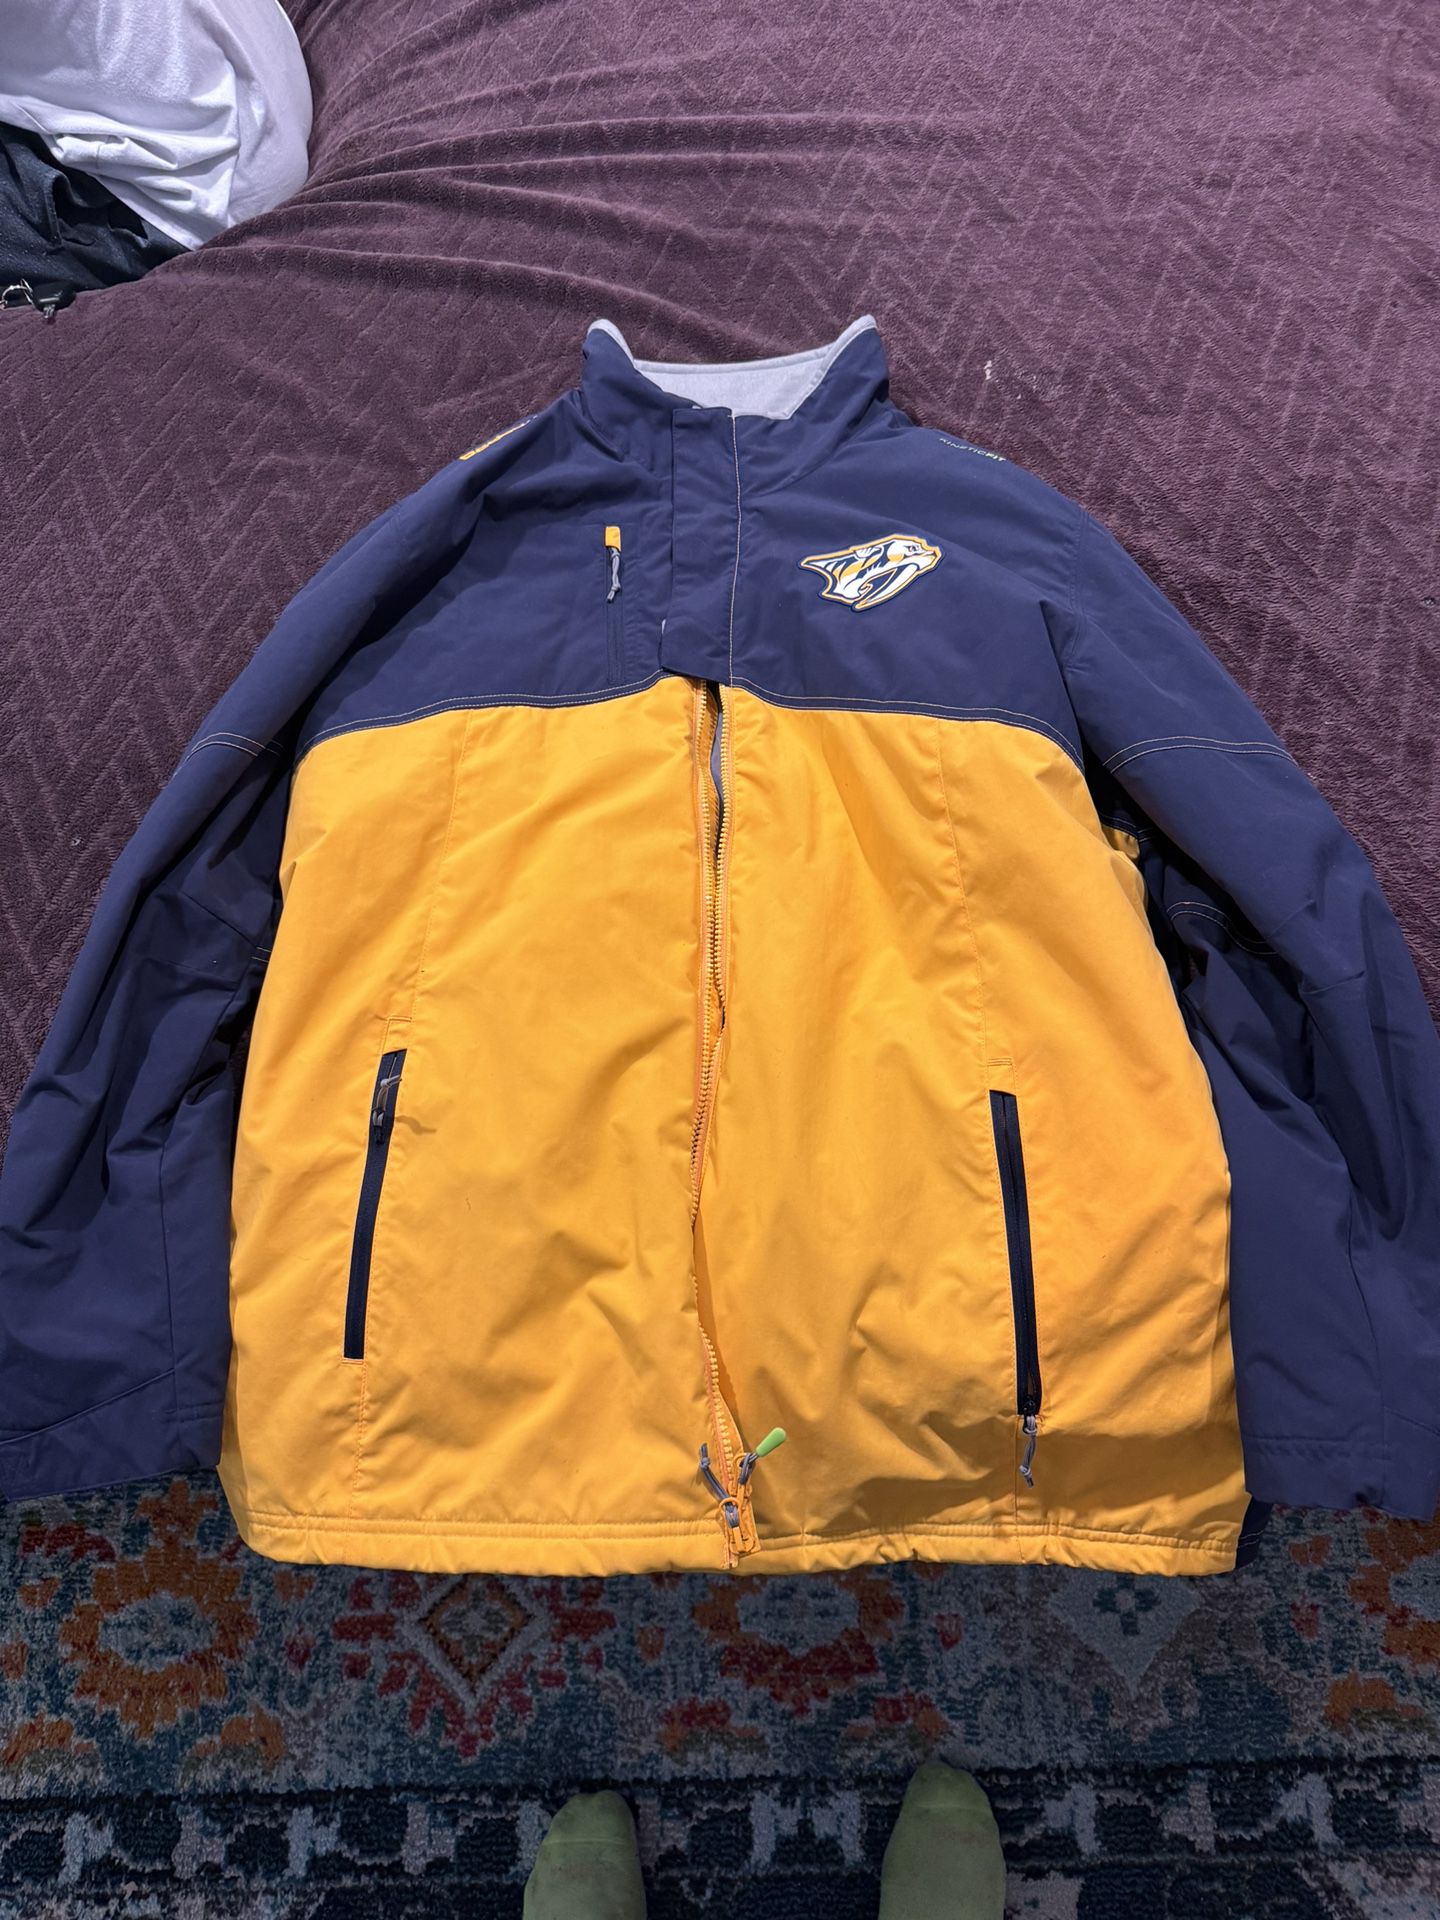 Nashville Predators XL (KineticFit) Jacket